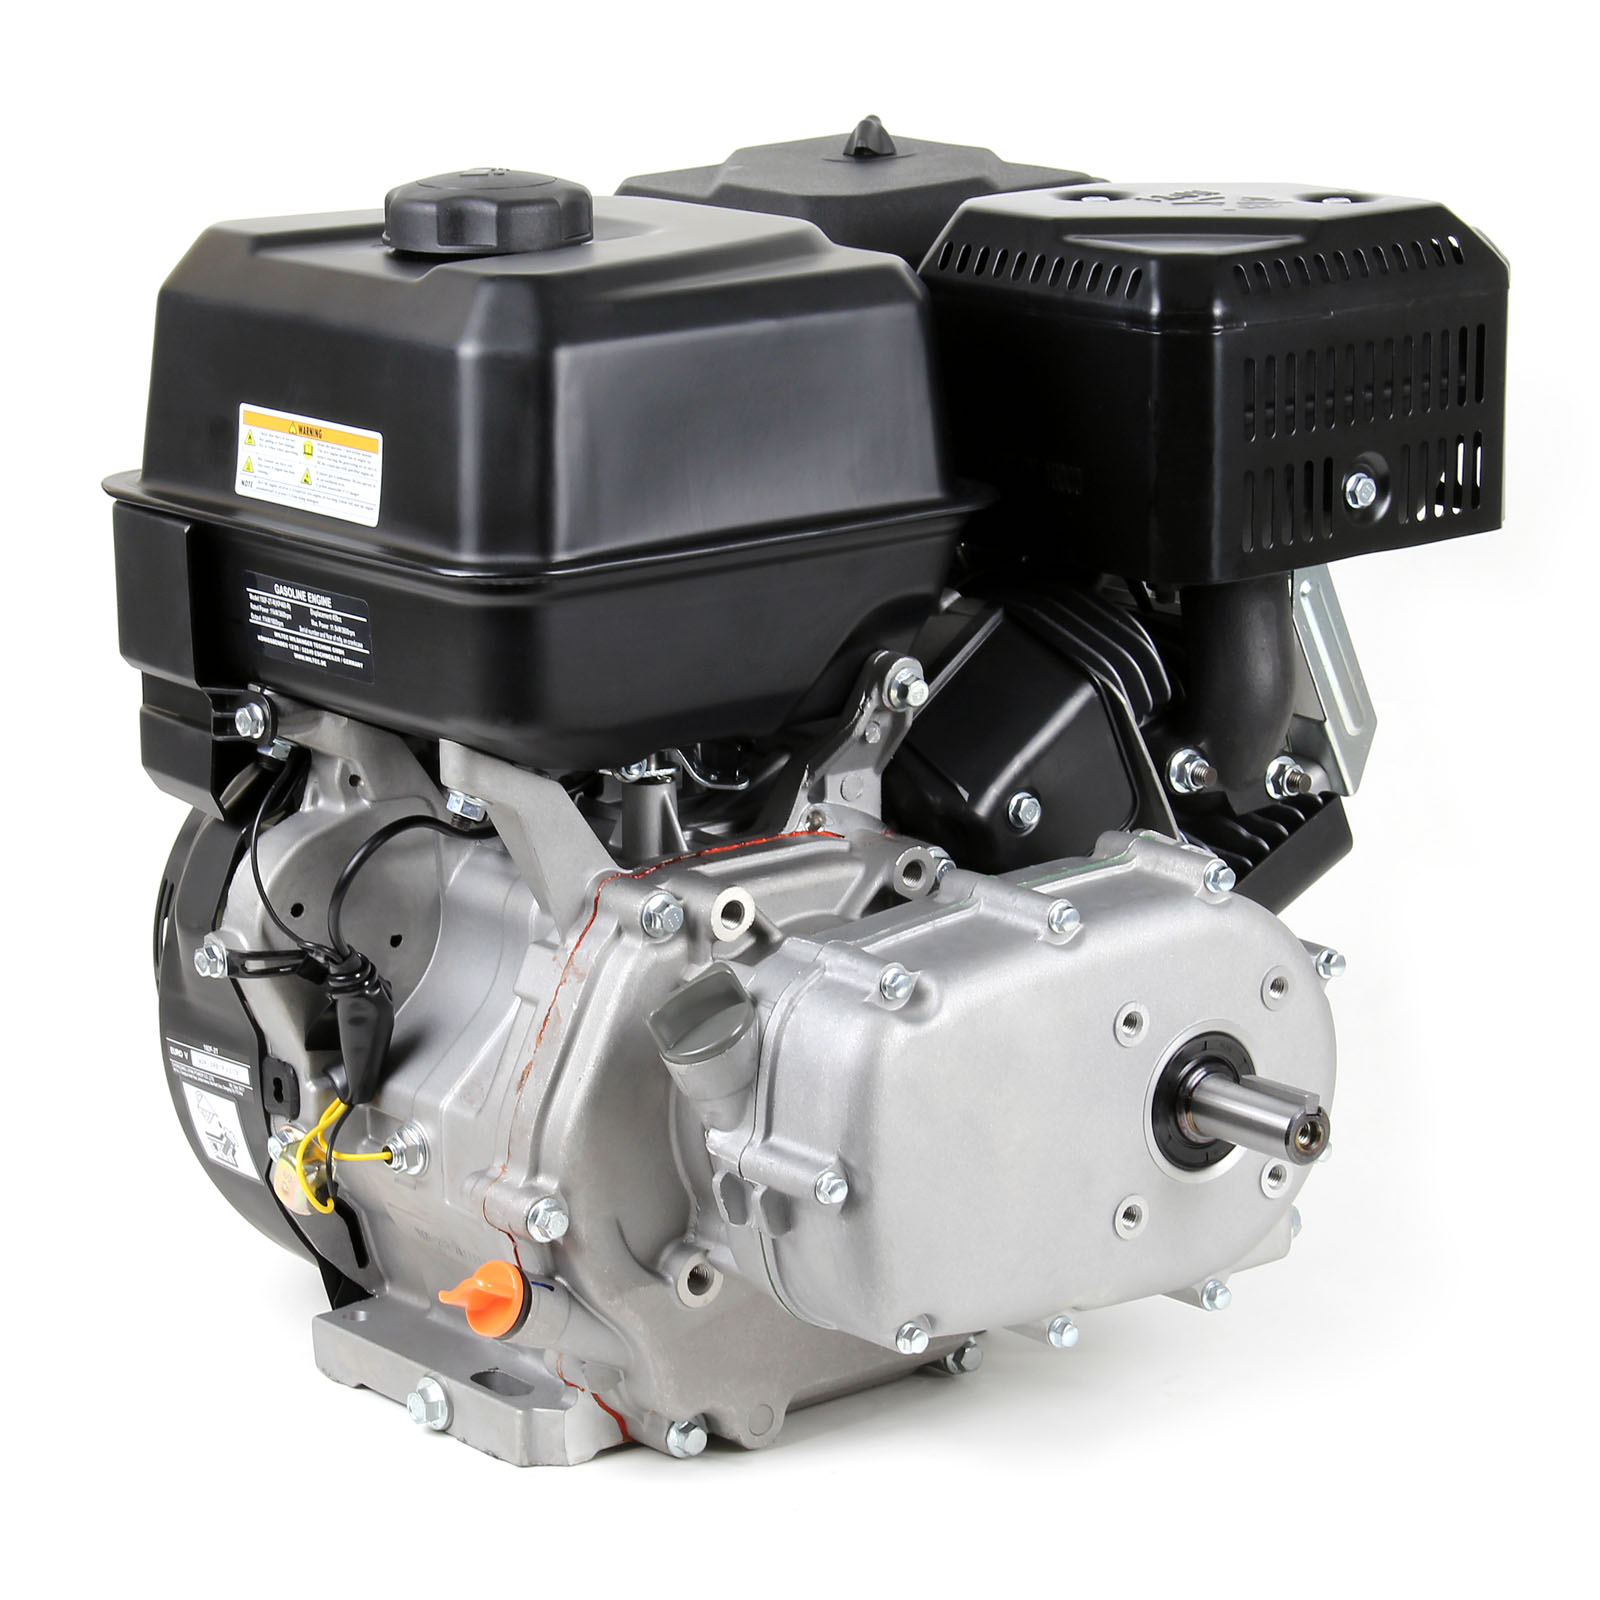 LIFAN KP460 25,4mm Benzinmotor Einzylinder 16,3PS Motor Rüttelplatte Baumaschine 